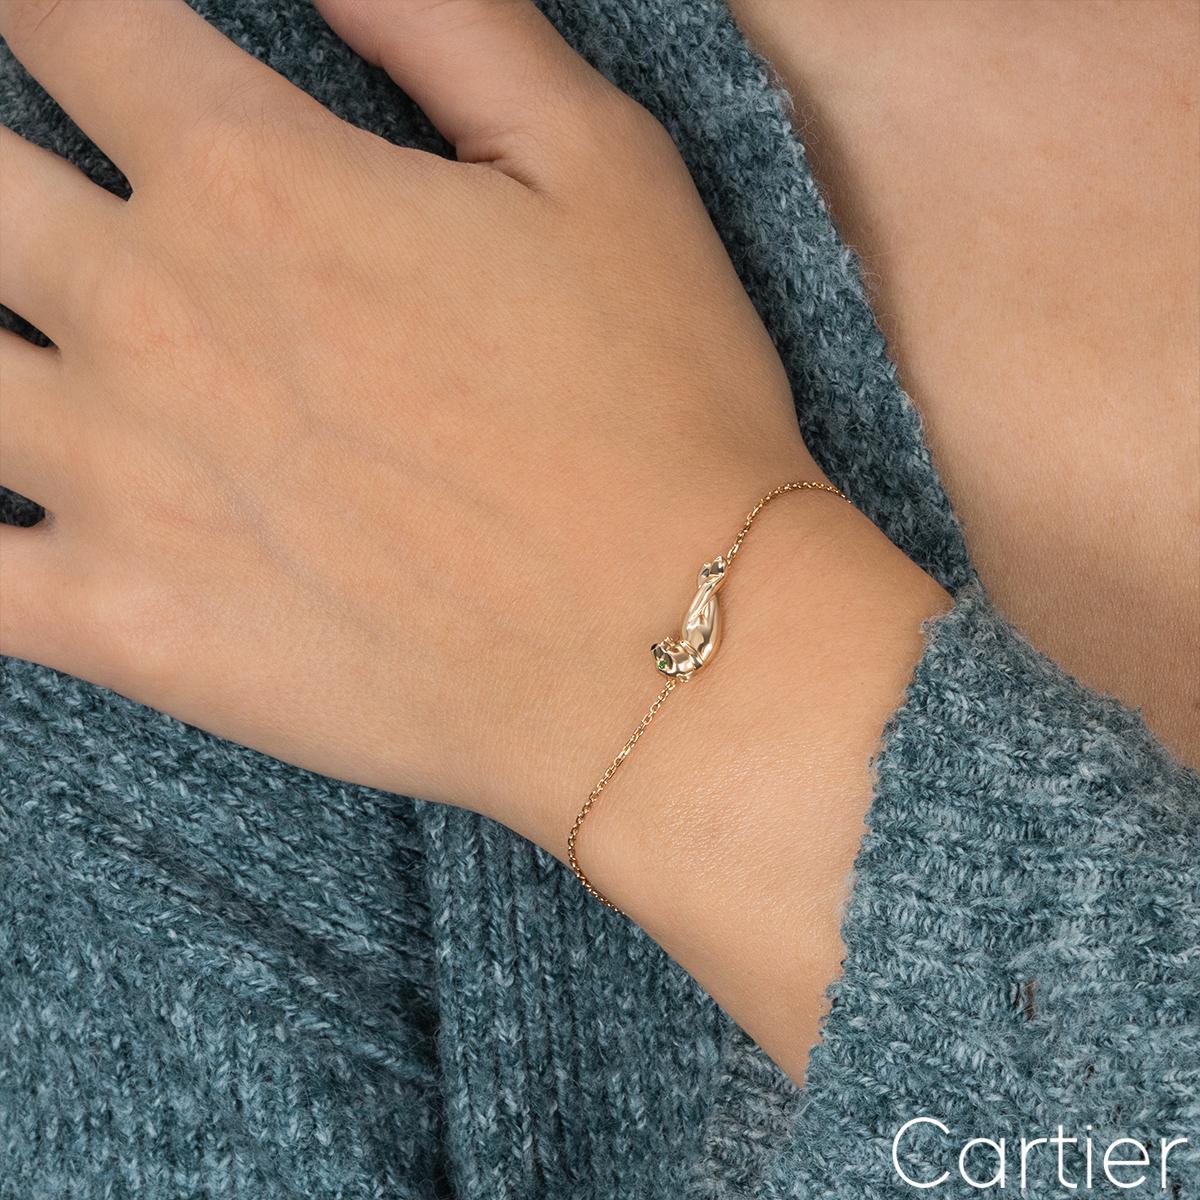 Women's Cartier Rose Gold Panthere De Cartier Bracelet Size 16 B6067316